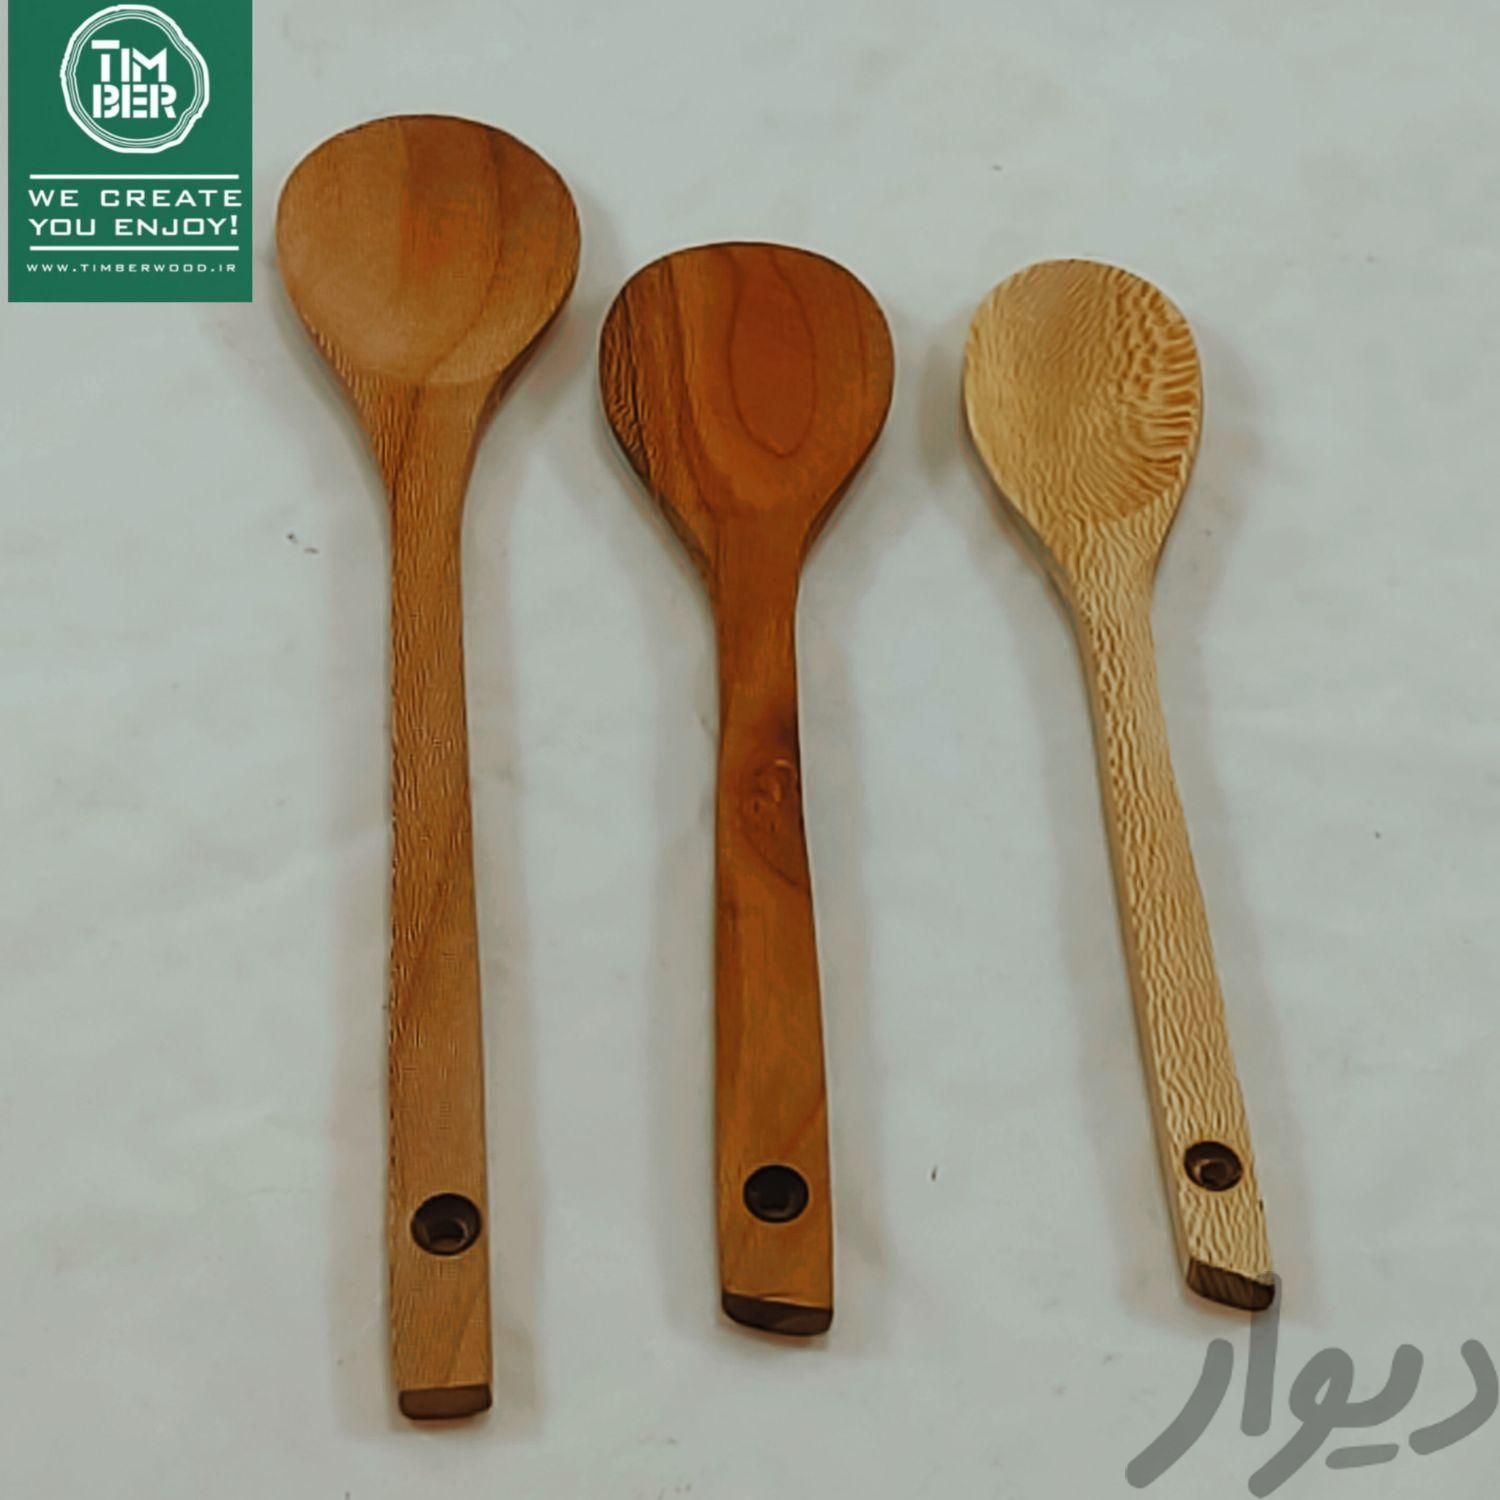 فروش عمده و قاشق و چنگال چوبی|ظروف پخت‌وپز|تهران, شوش|دیوار